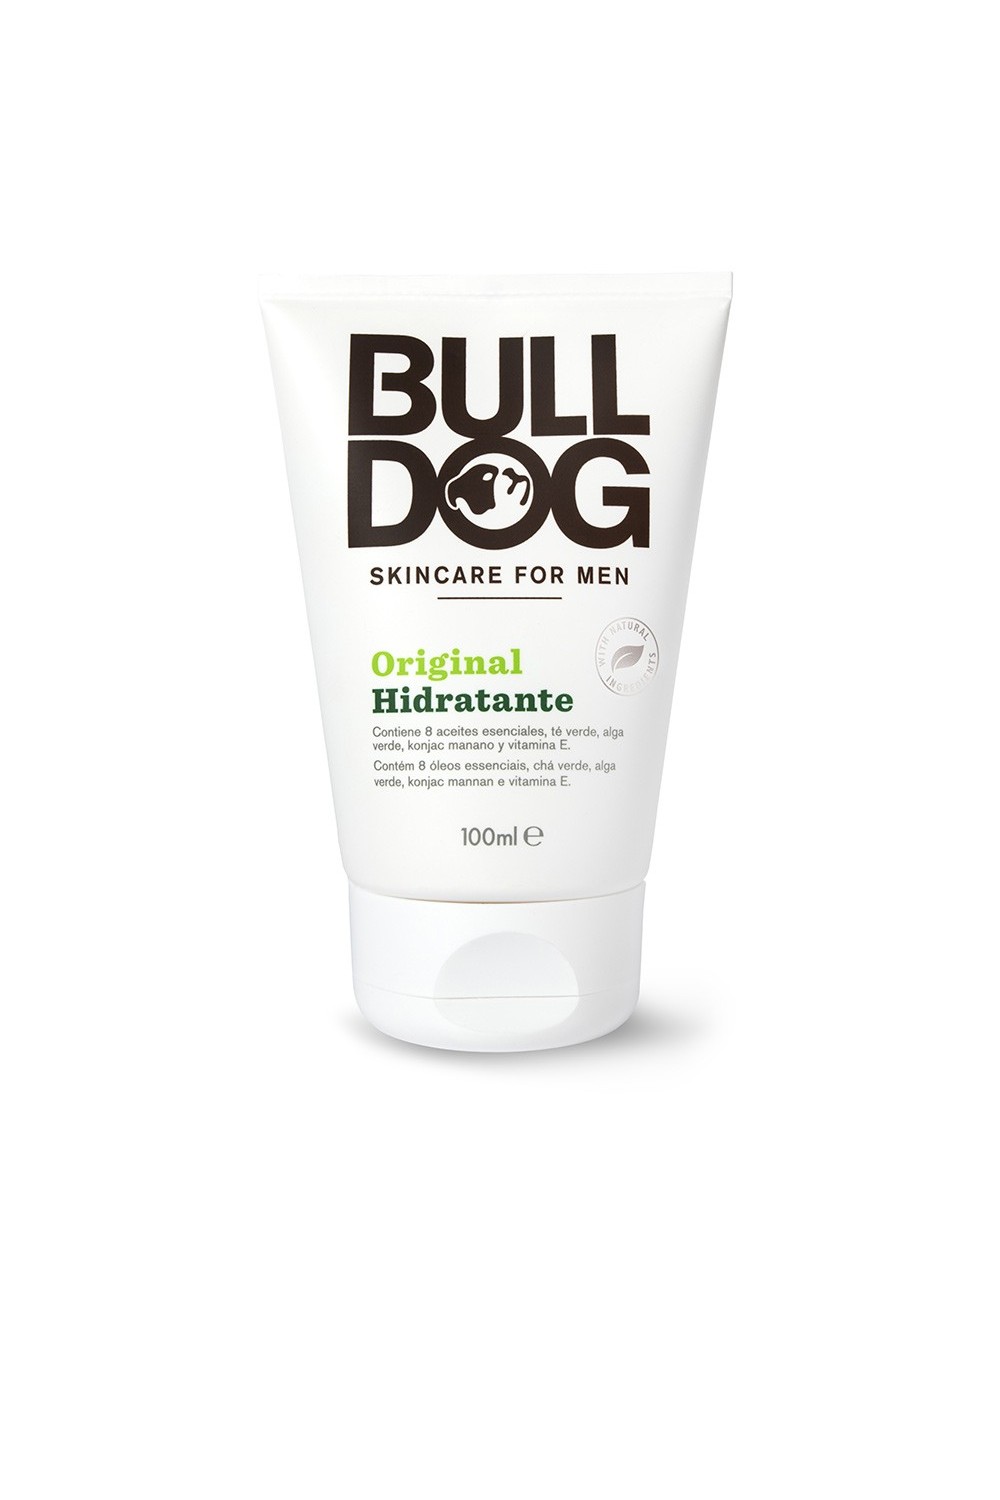 Bulldog Skincare Original Moisturiser 100ml